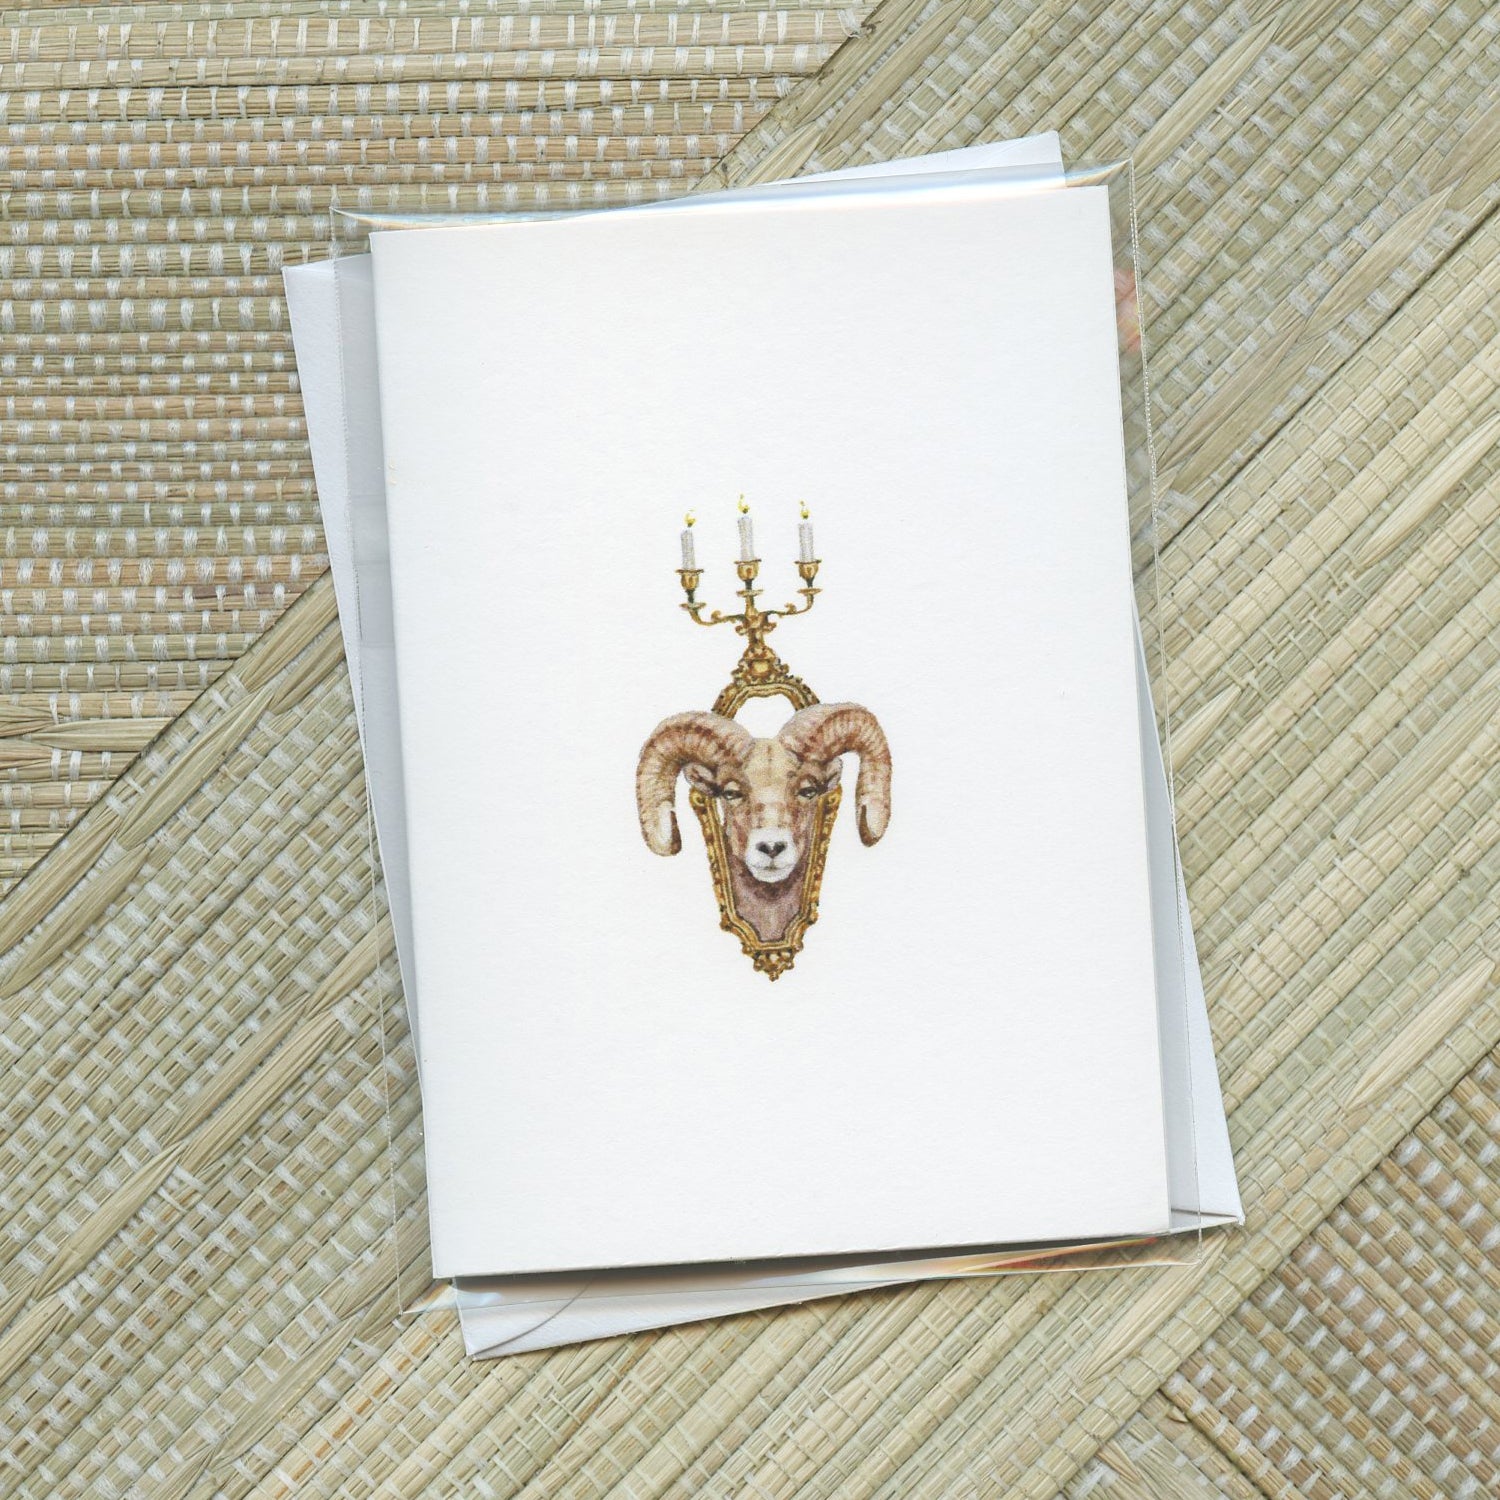 "Aries" Greeting Card